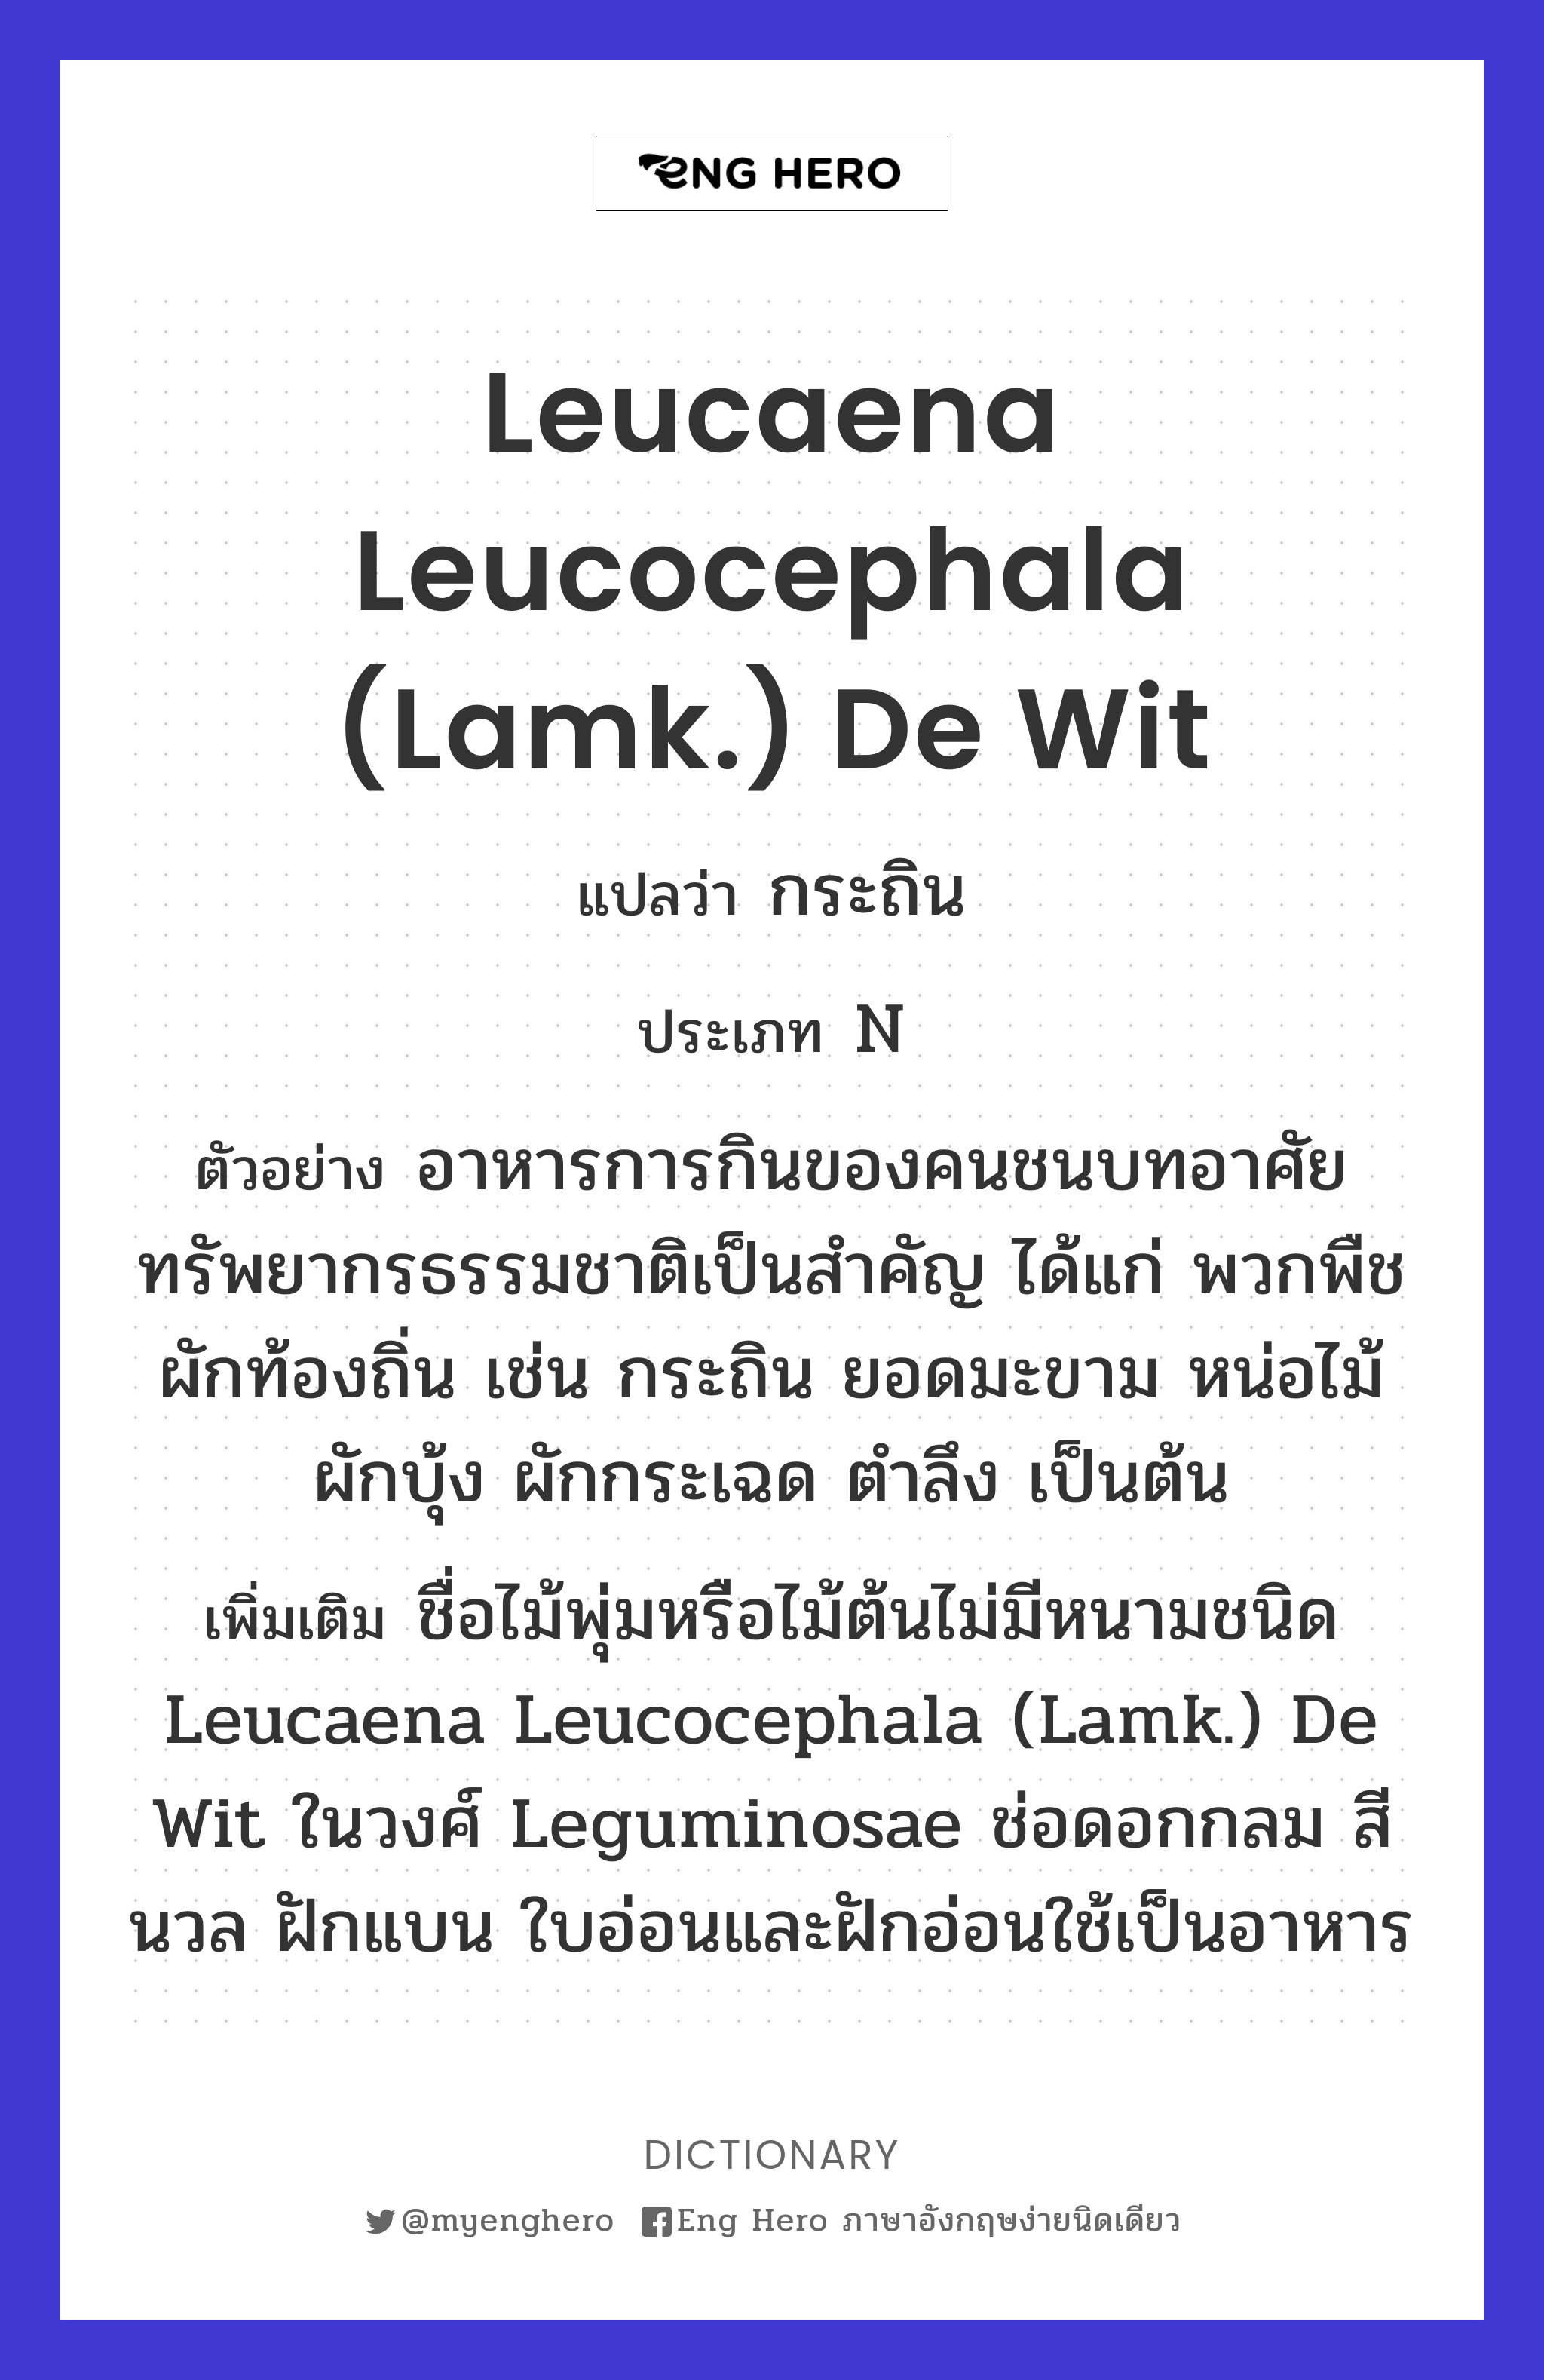 Leucaena leucocephala (Lamk.) de Wit